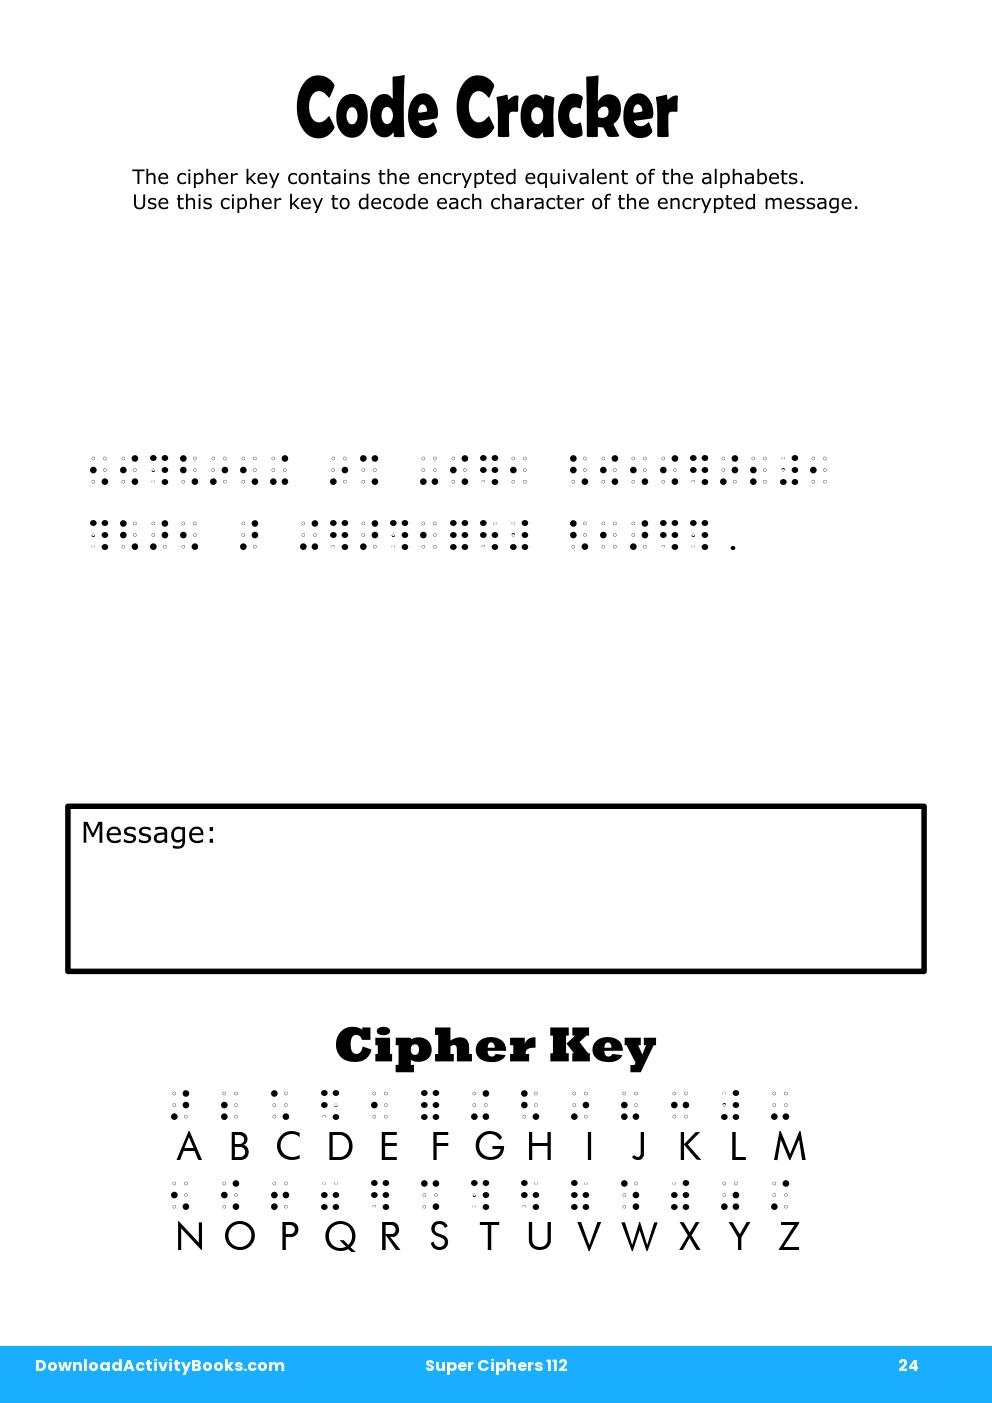 Code Cracker in Super Ciphers 112